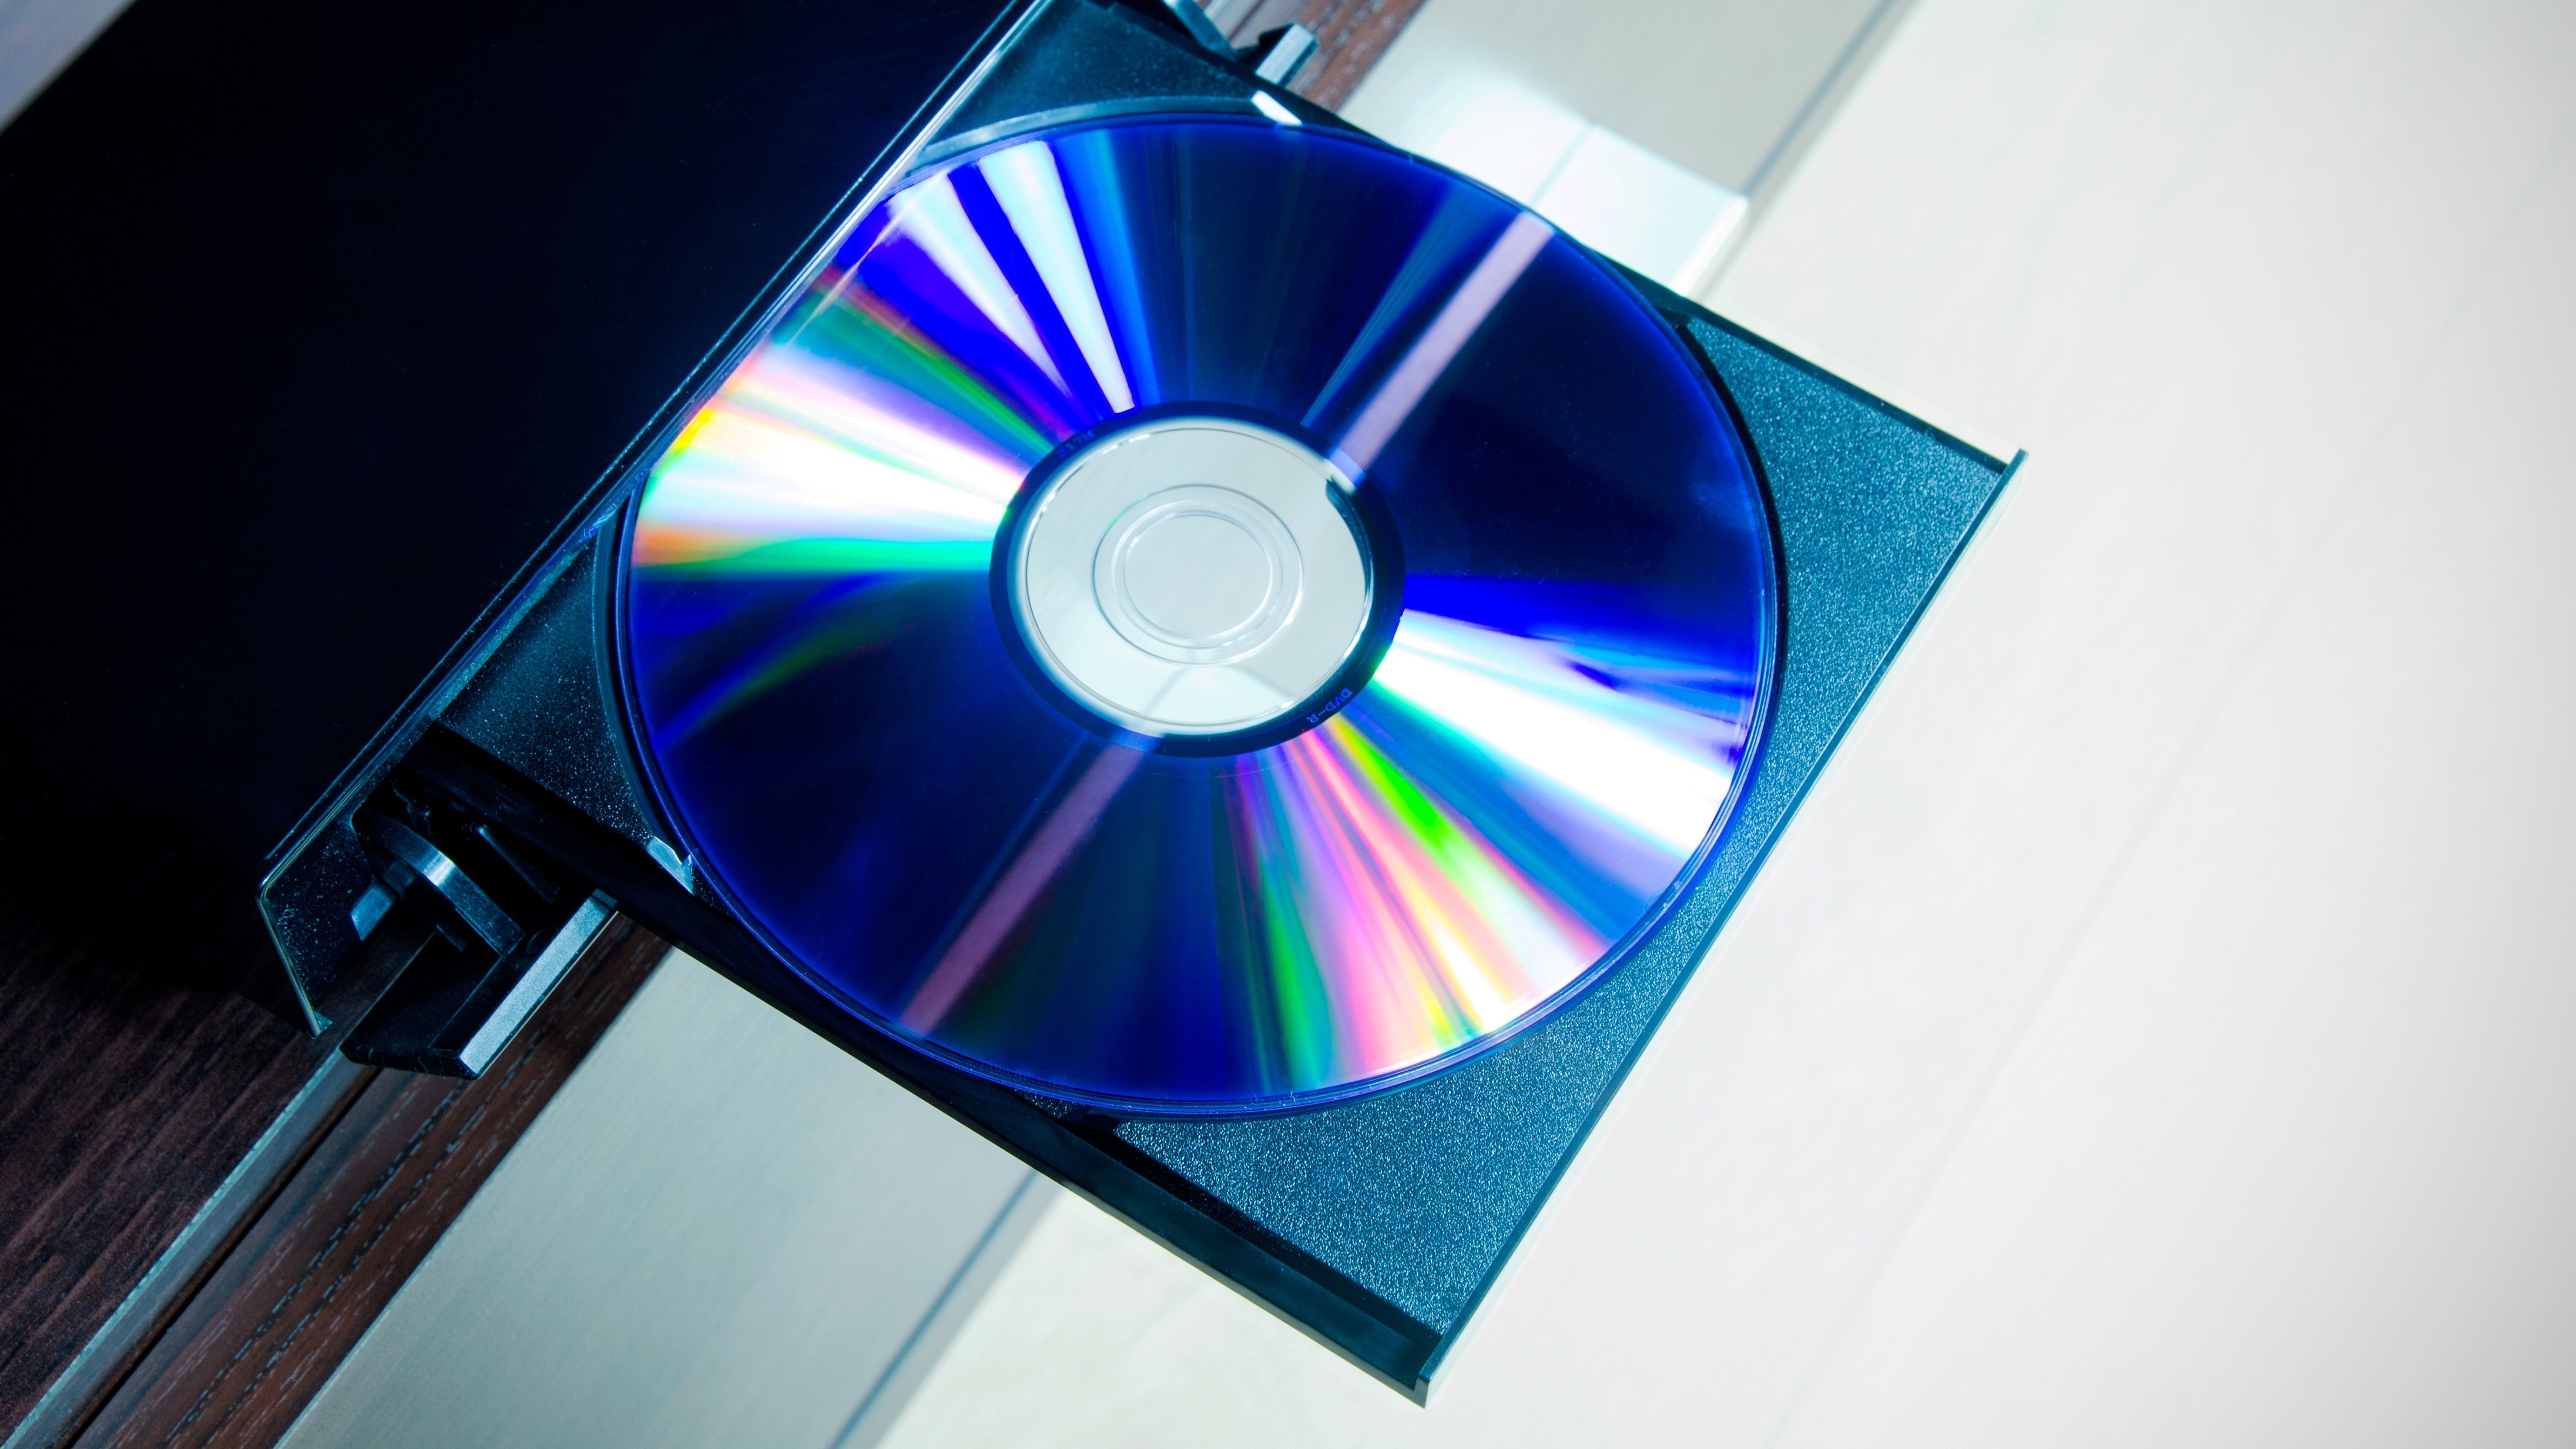 blu-ray disc in player drive